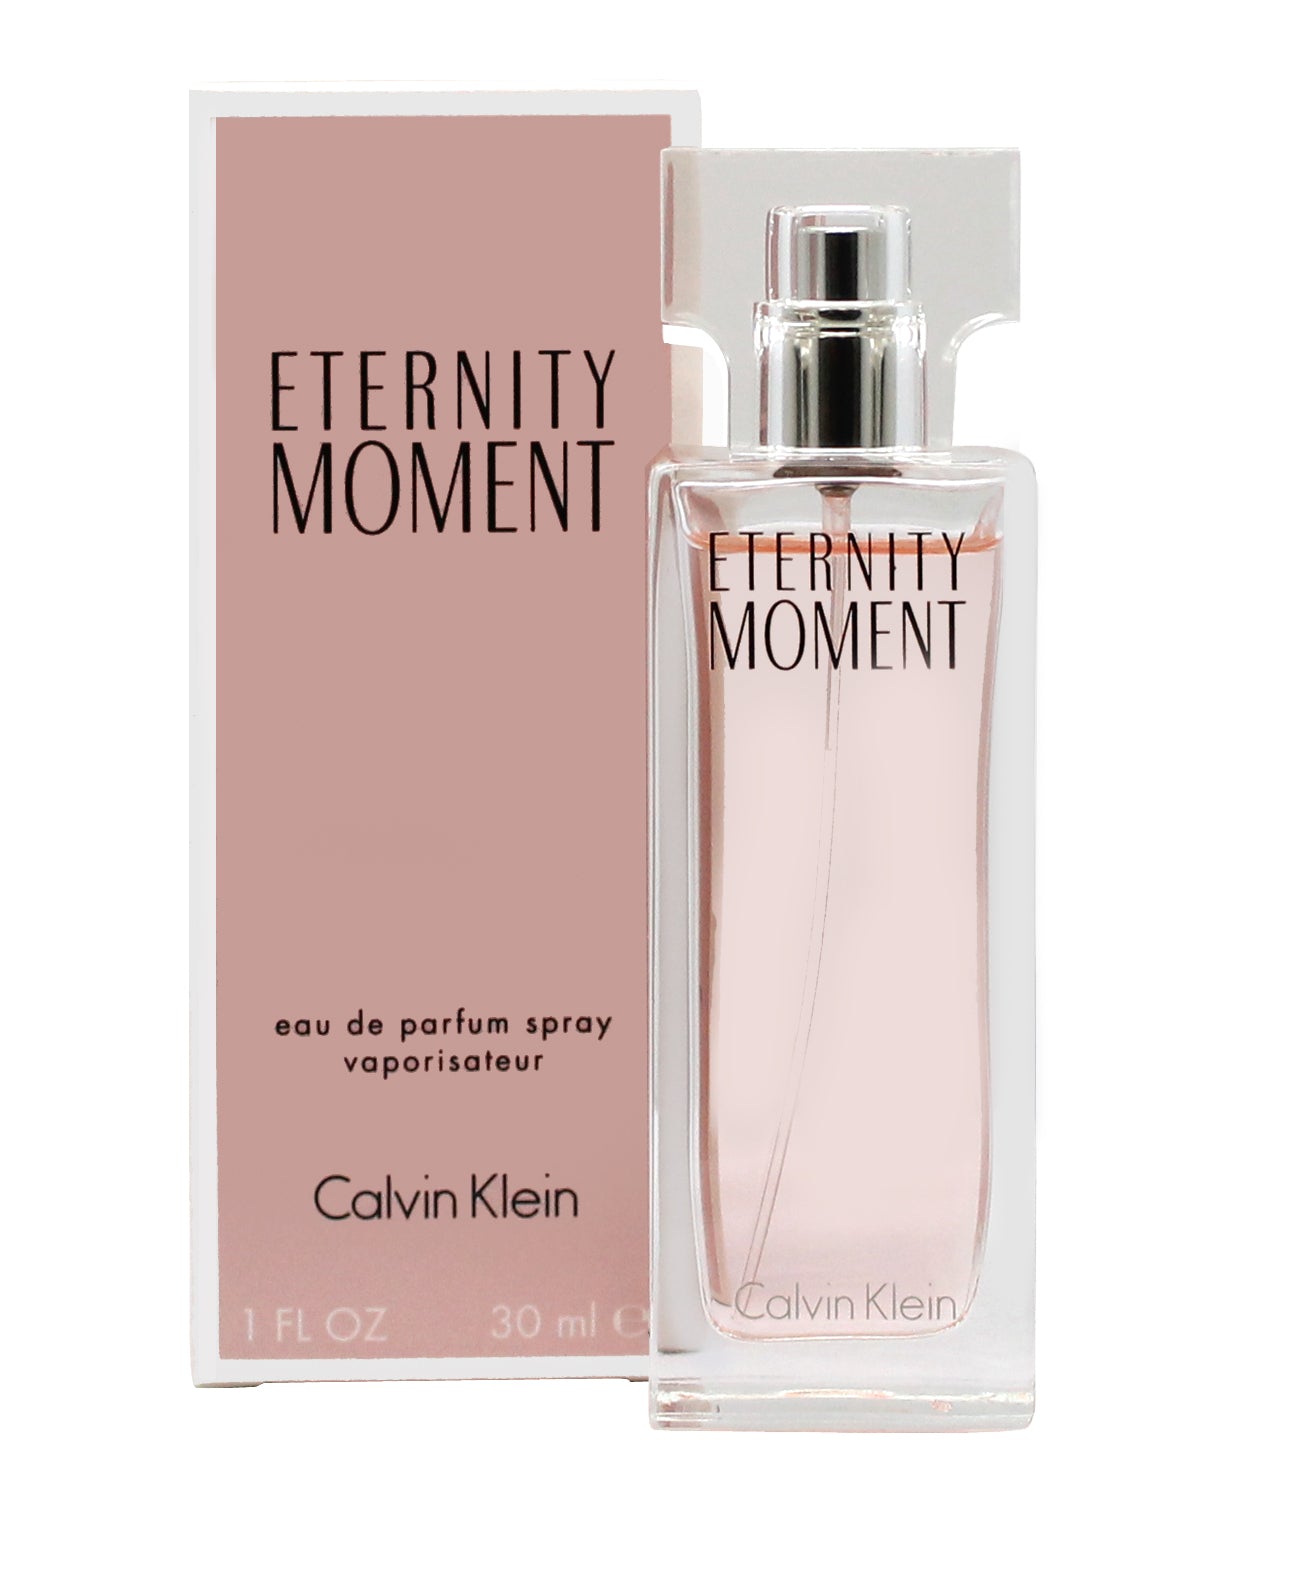 View Calvin Klein Eternity Moment Eau de Parfum 30ml Spray information